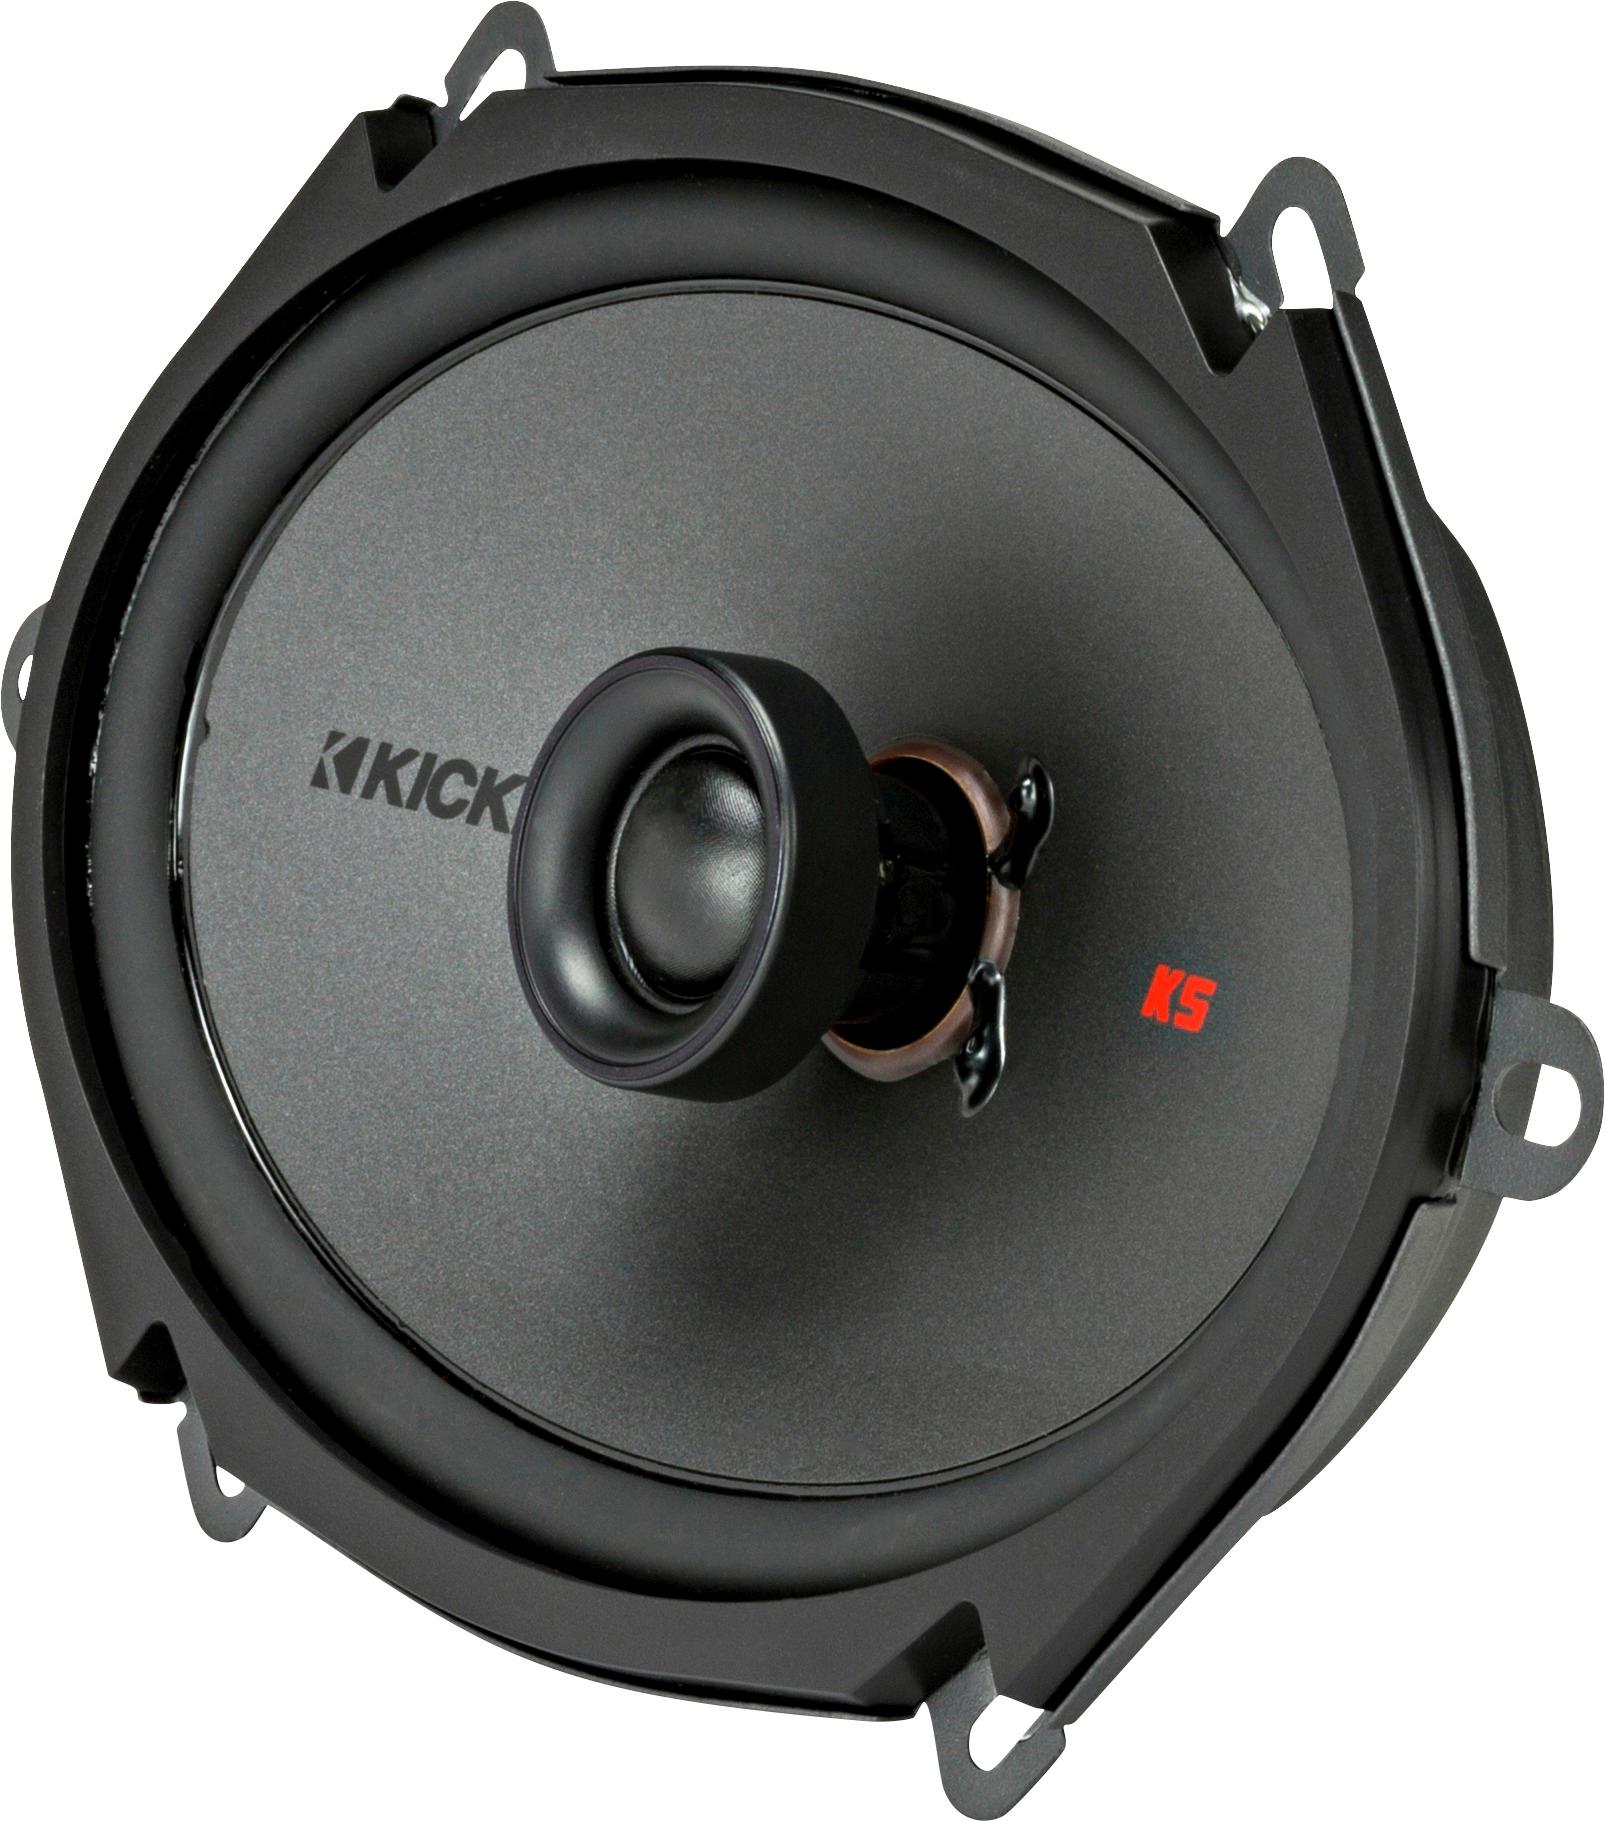 Left View: KICKER - KS Series 6" x 8" 2-Way Car Speaker with Polypropylene Cones (Each) - Black